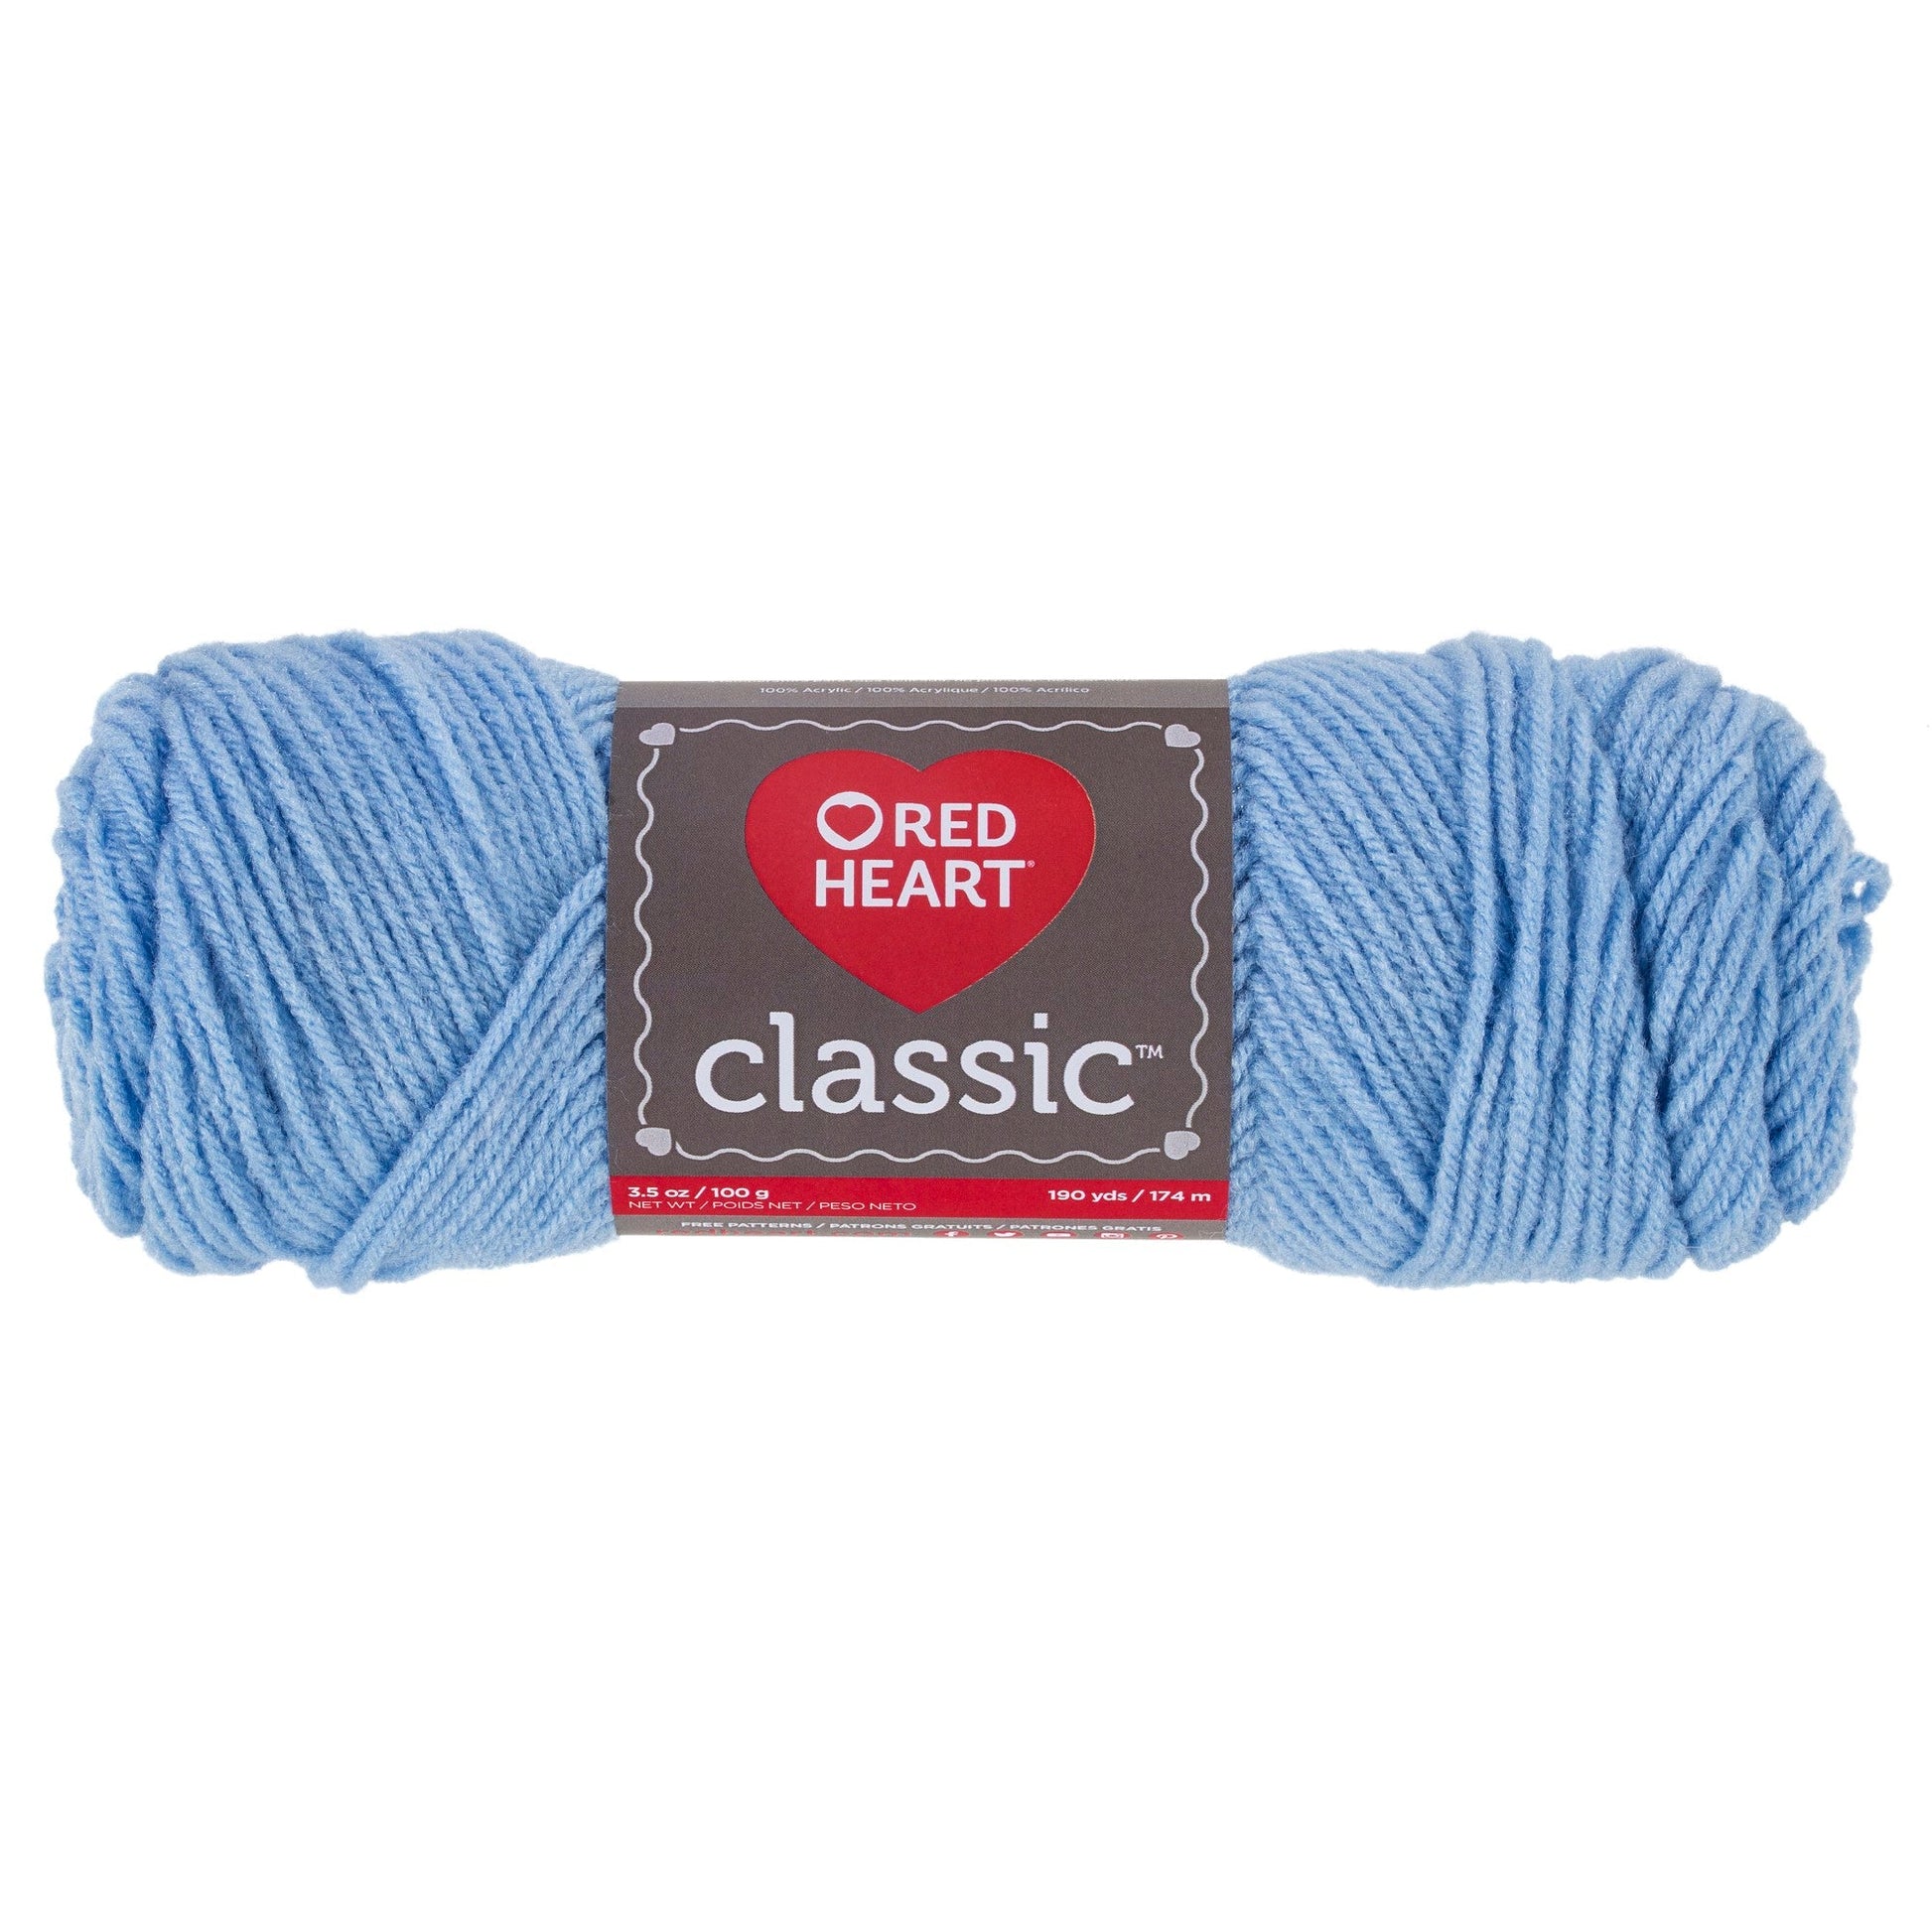 Red Heart Classic Yarn - Clearance shades Blue Jewel